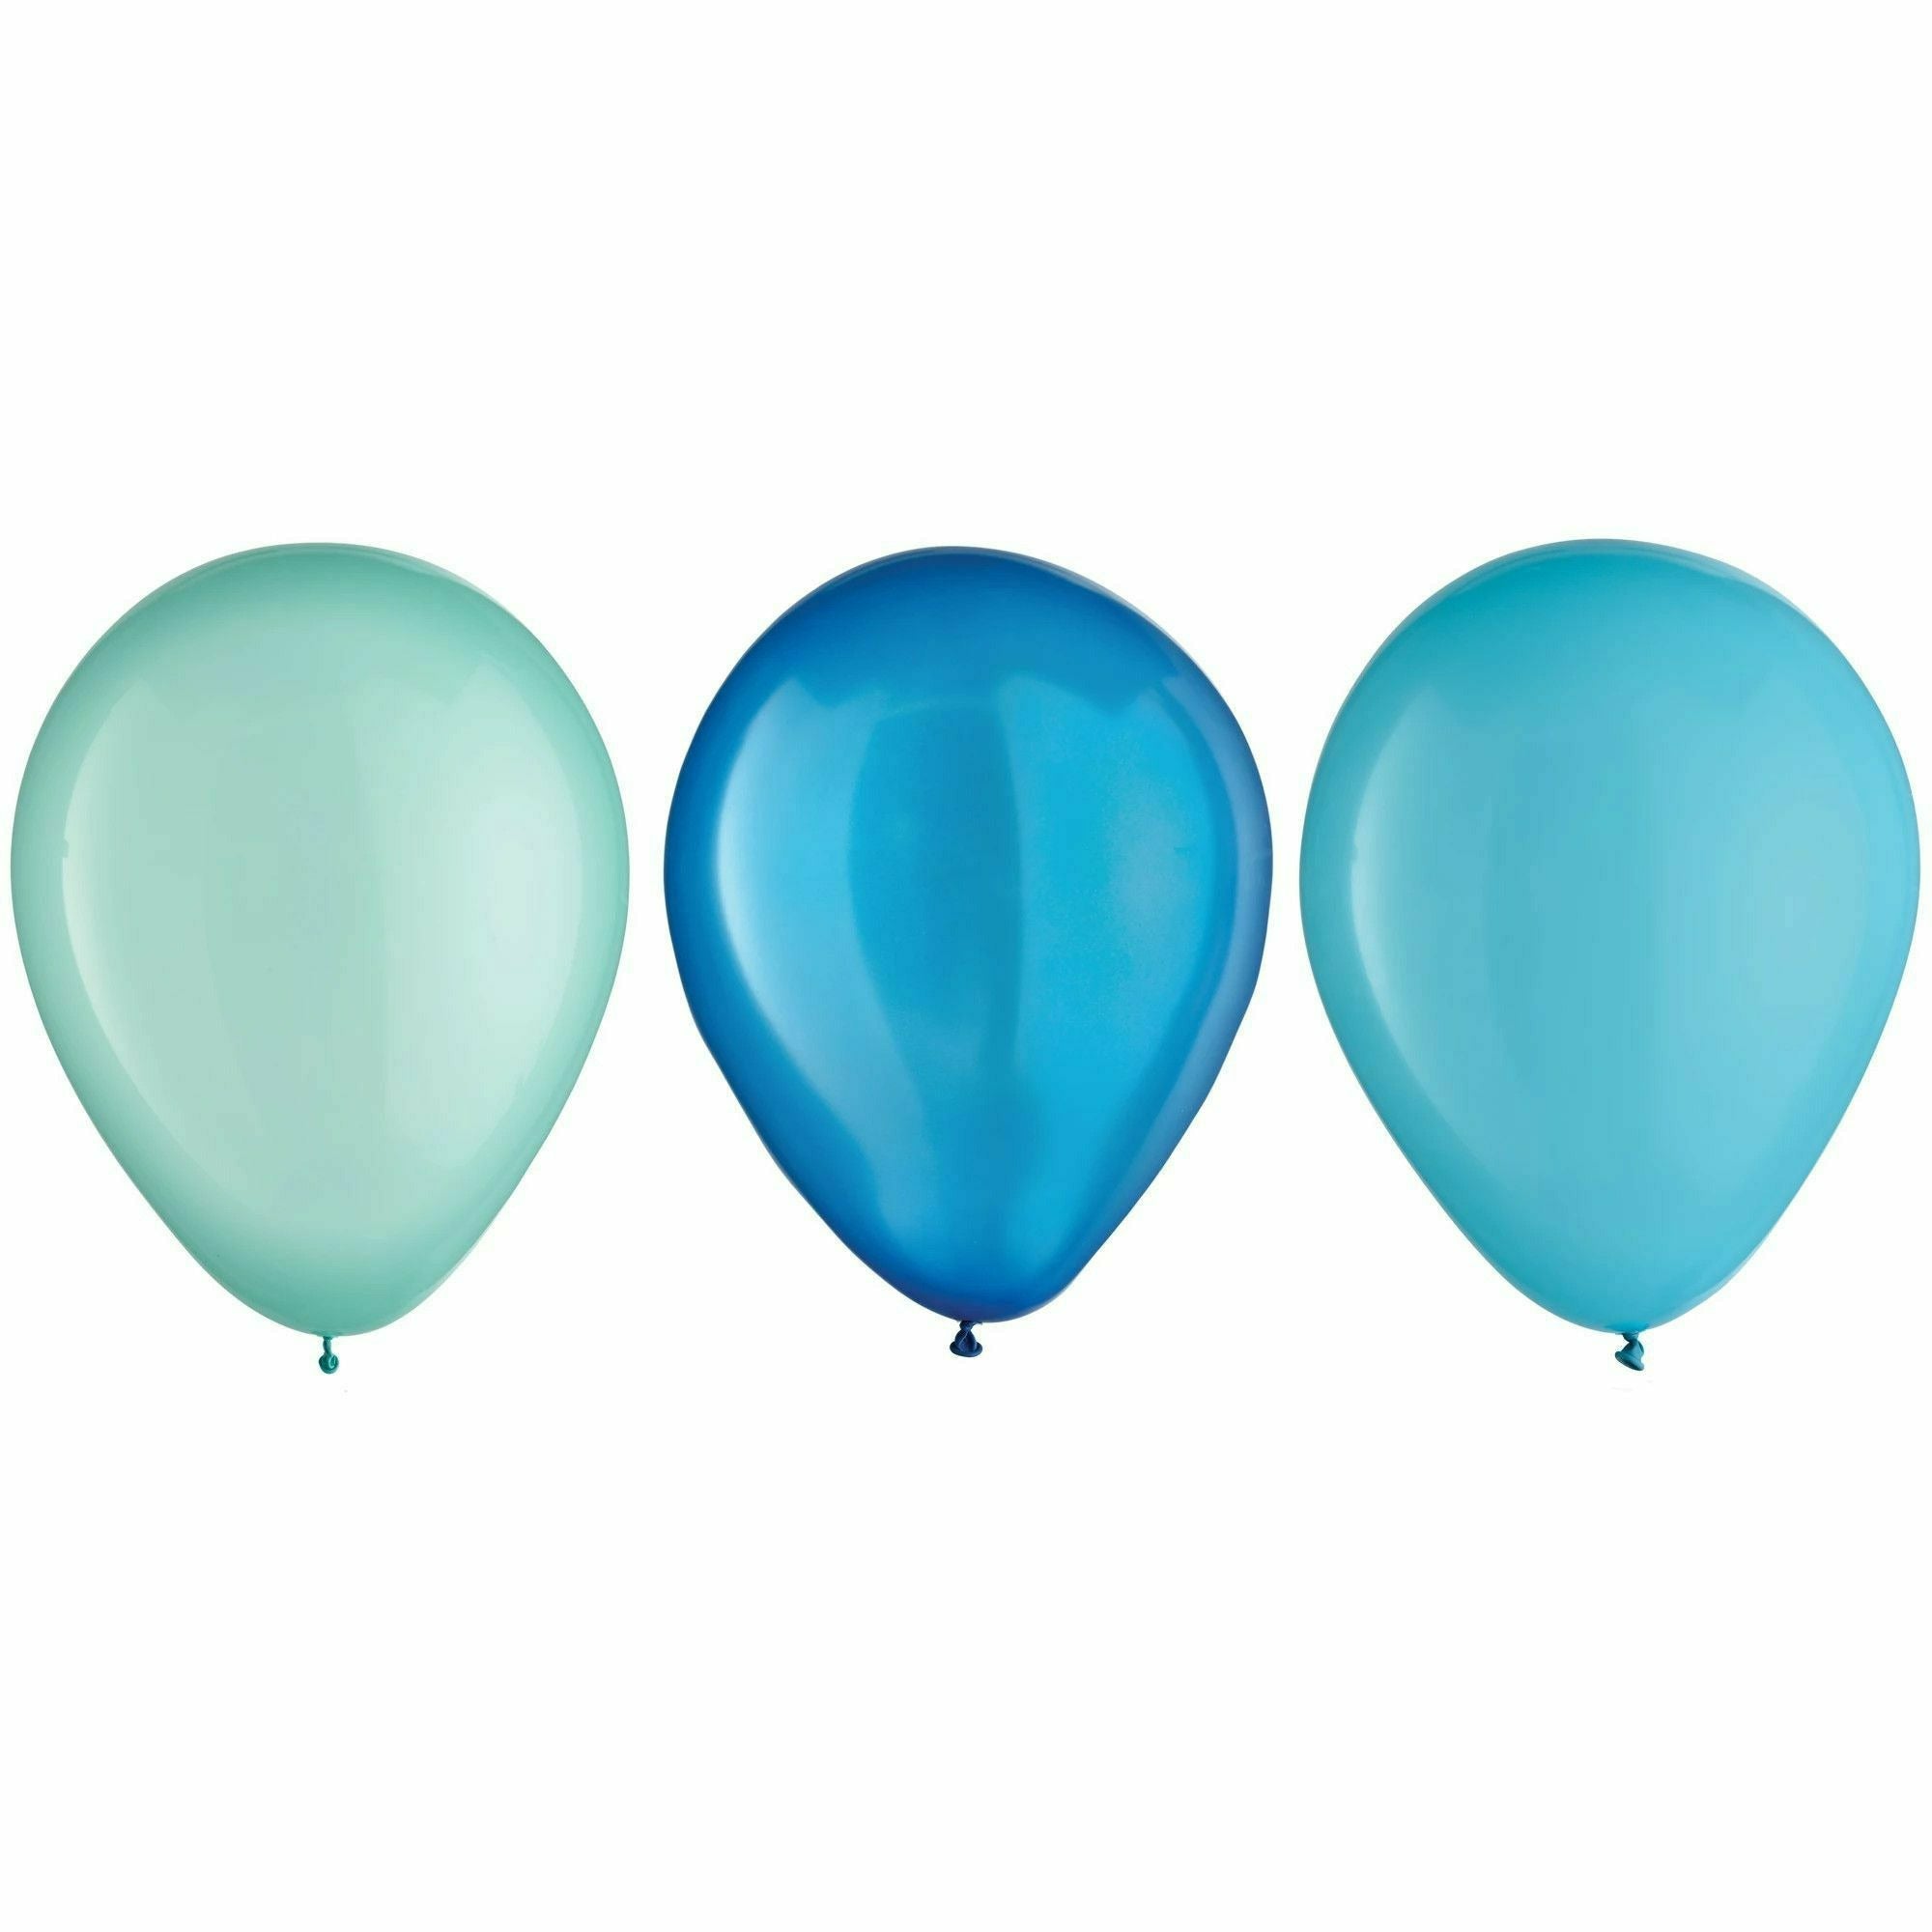 Amscan BALLOONS Aqua Blue 5" Latex Balloon Assortment